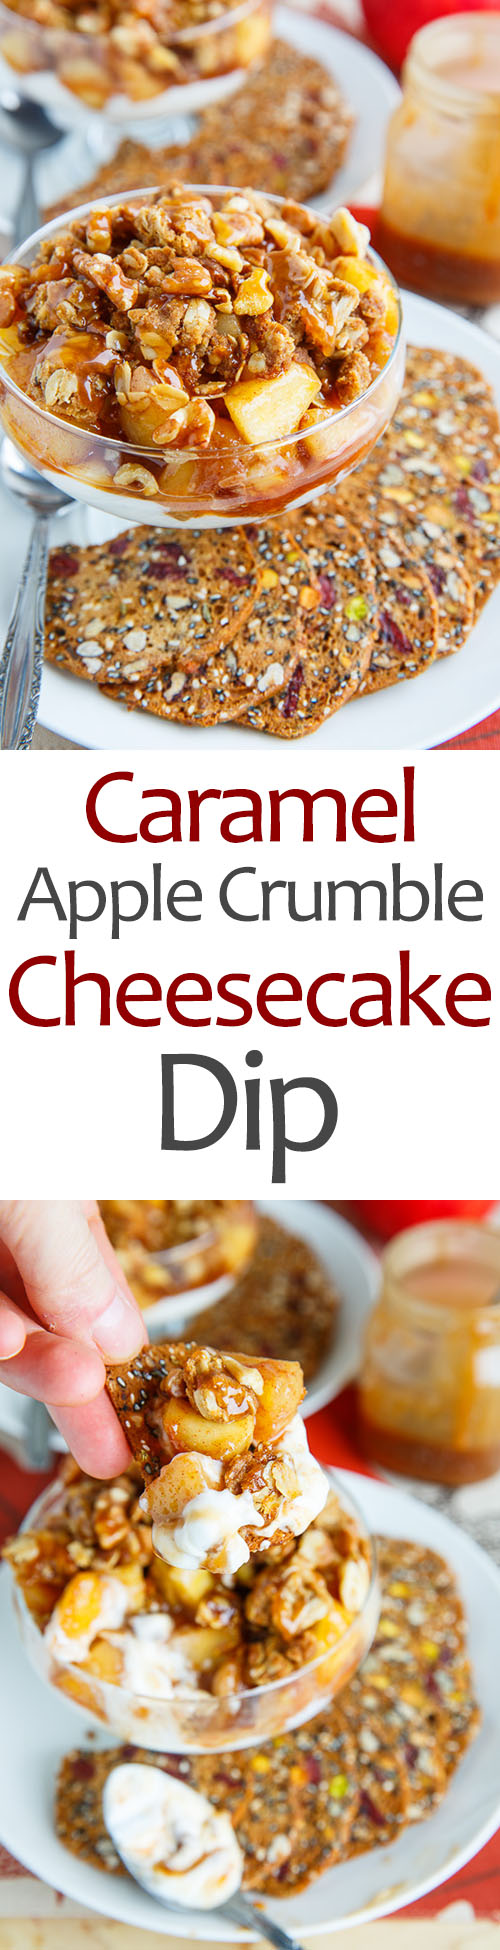 Caramel Apple Crumble Cheesecake Dip